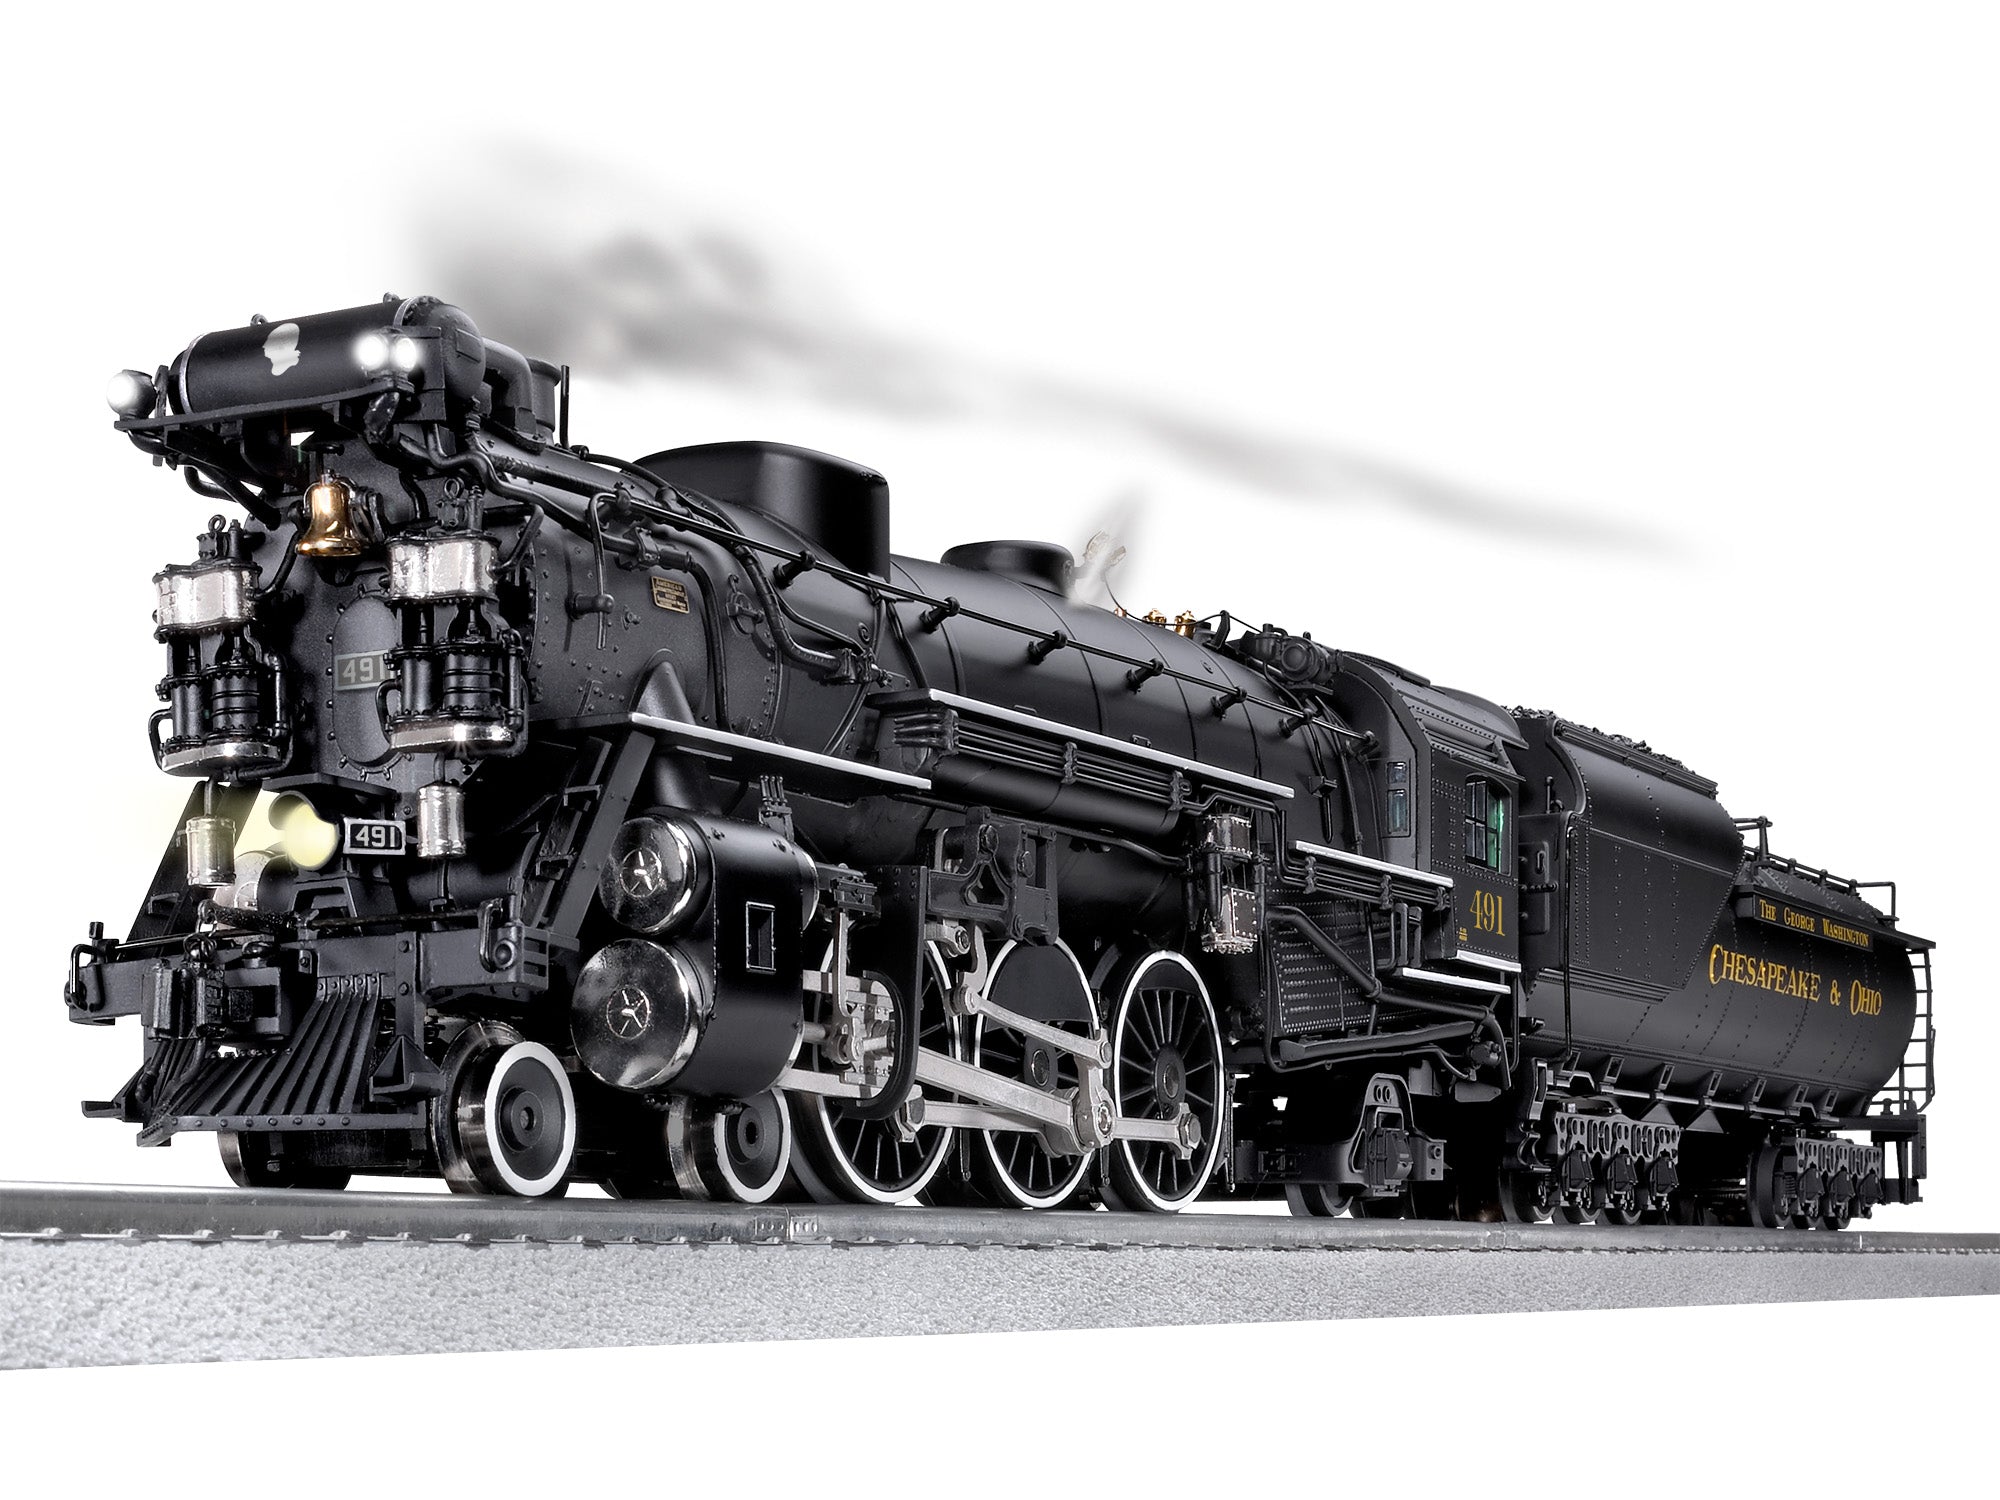 Lionel 2431110 - Legacy F19 Pacific Steam Engine "Chesapeake & Ohio" #491 "George Washington"